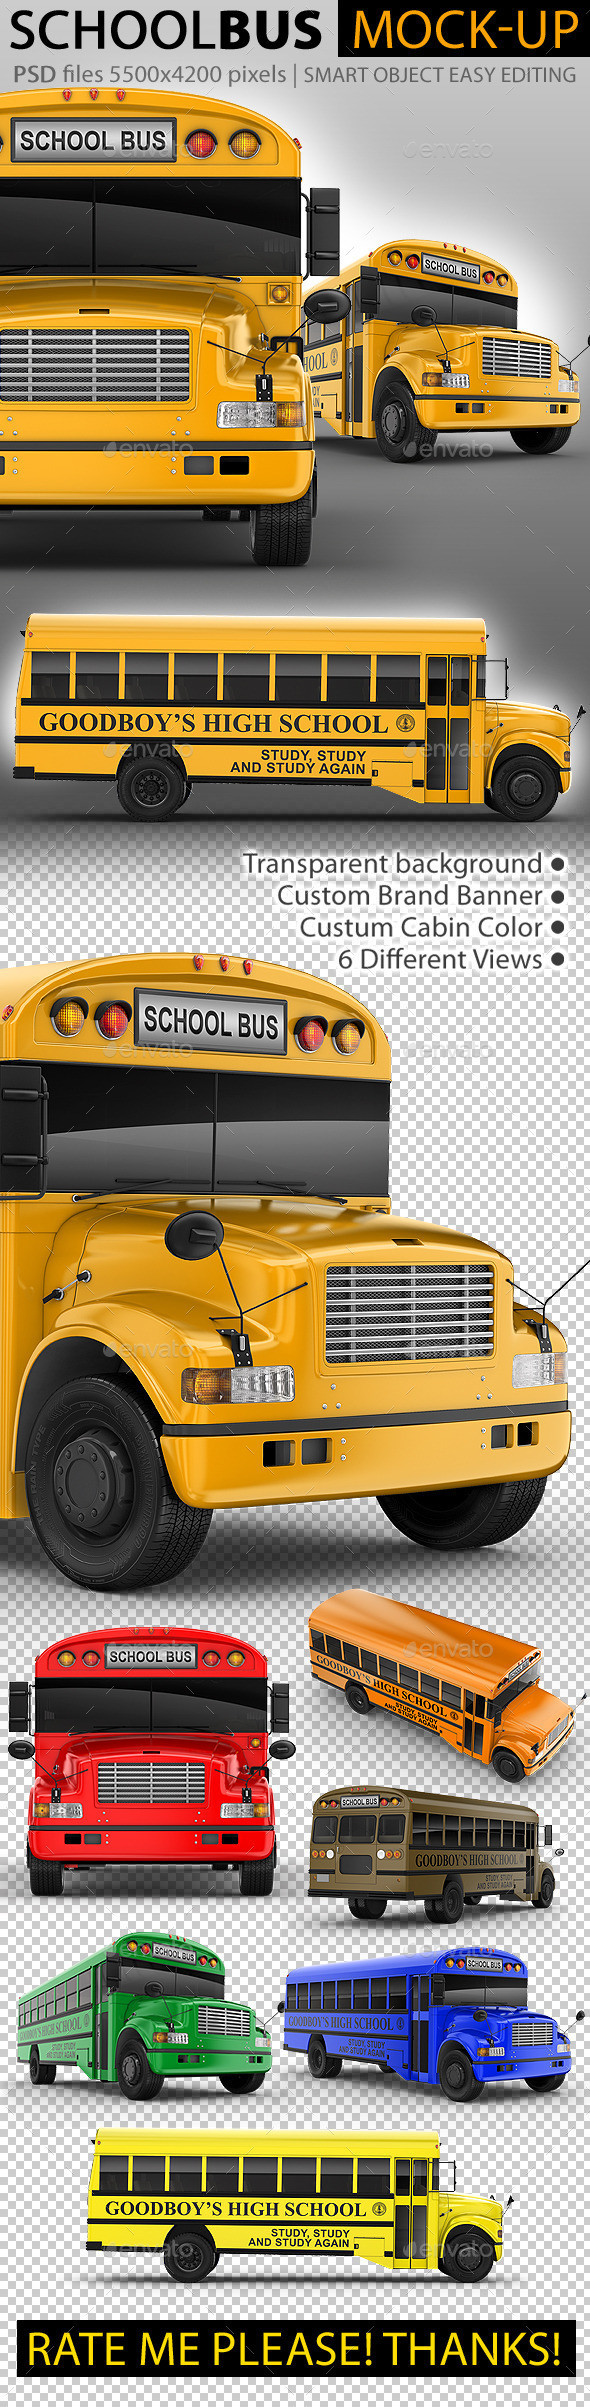 Preview schoolbus